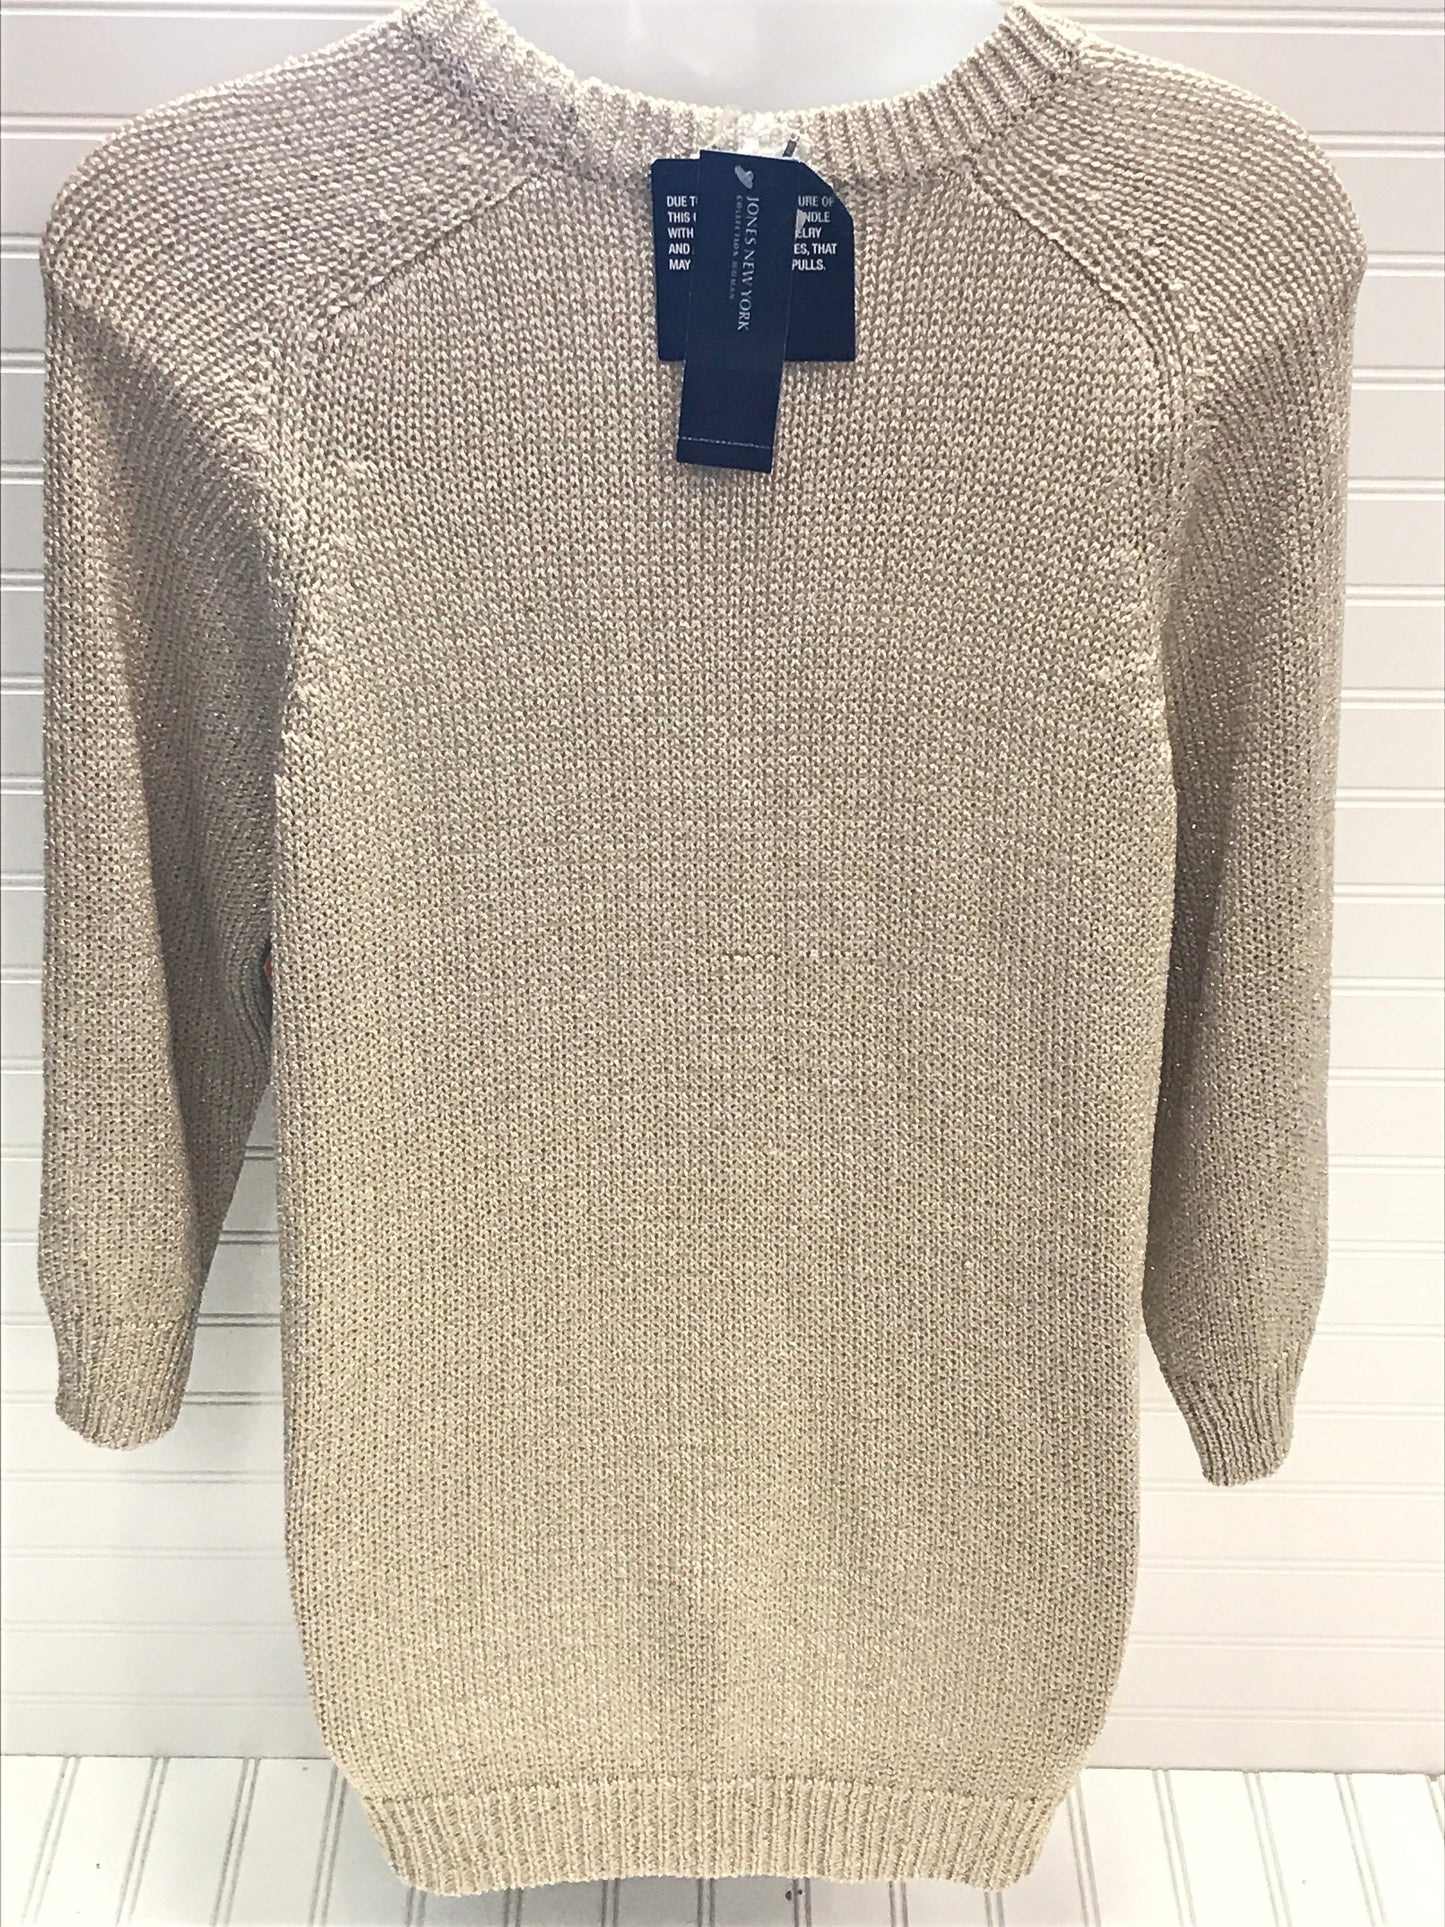 Sweater By Jones New York  Size: 3x